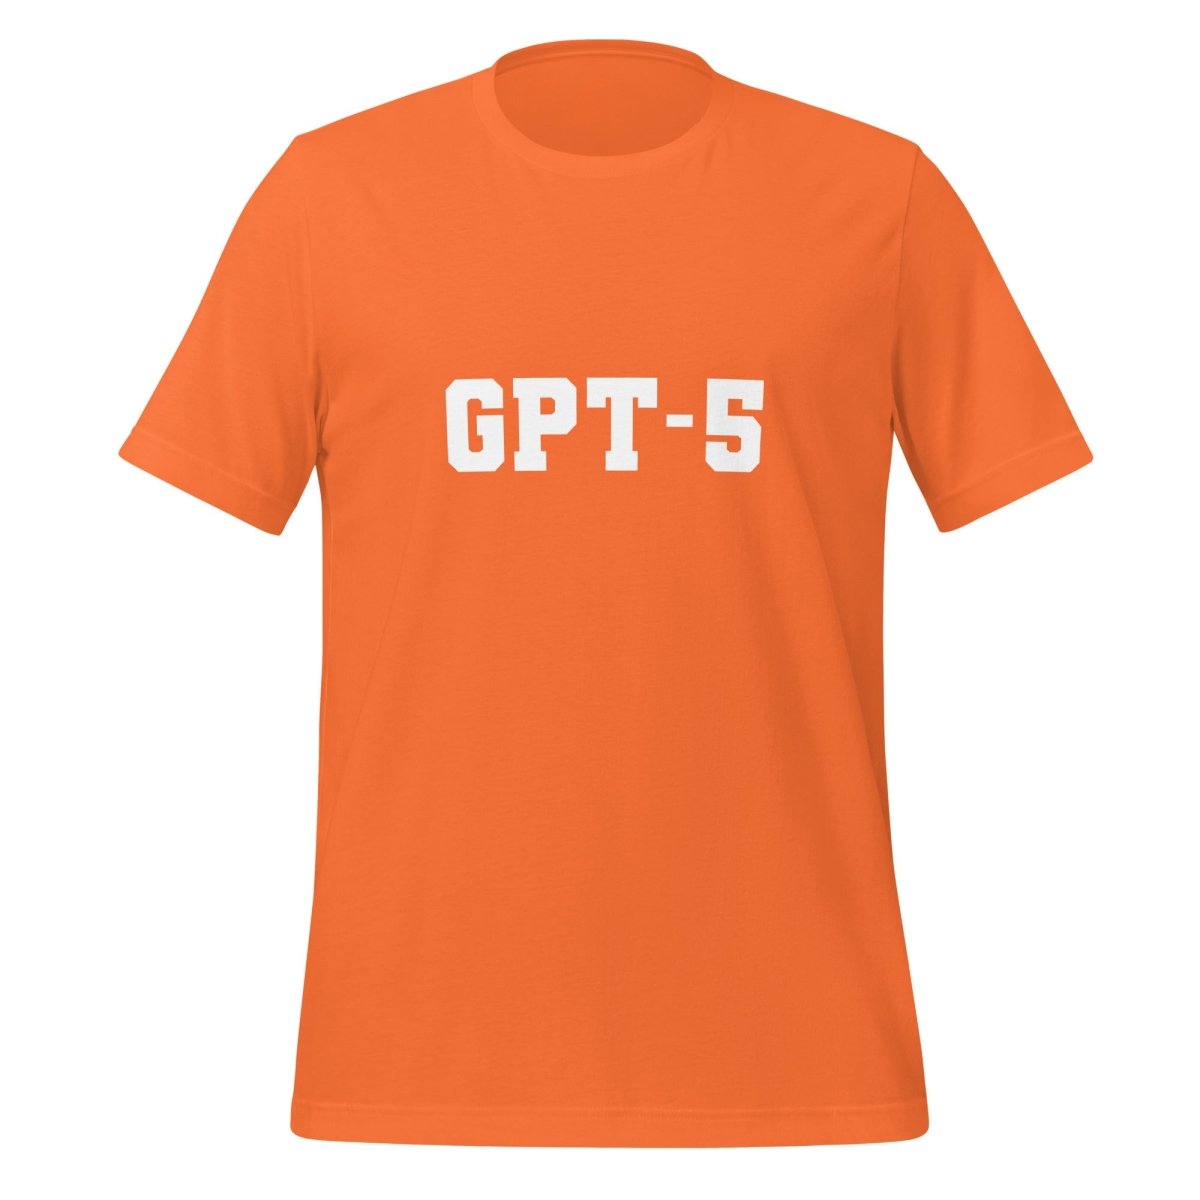 GPT - 5 T - Shirt 3 (unisex) - Orange - AI Store